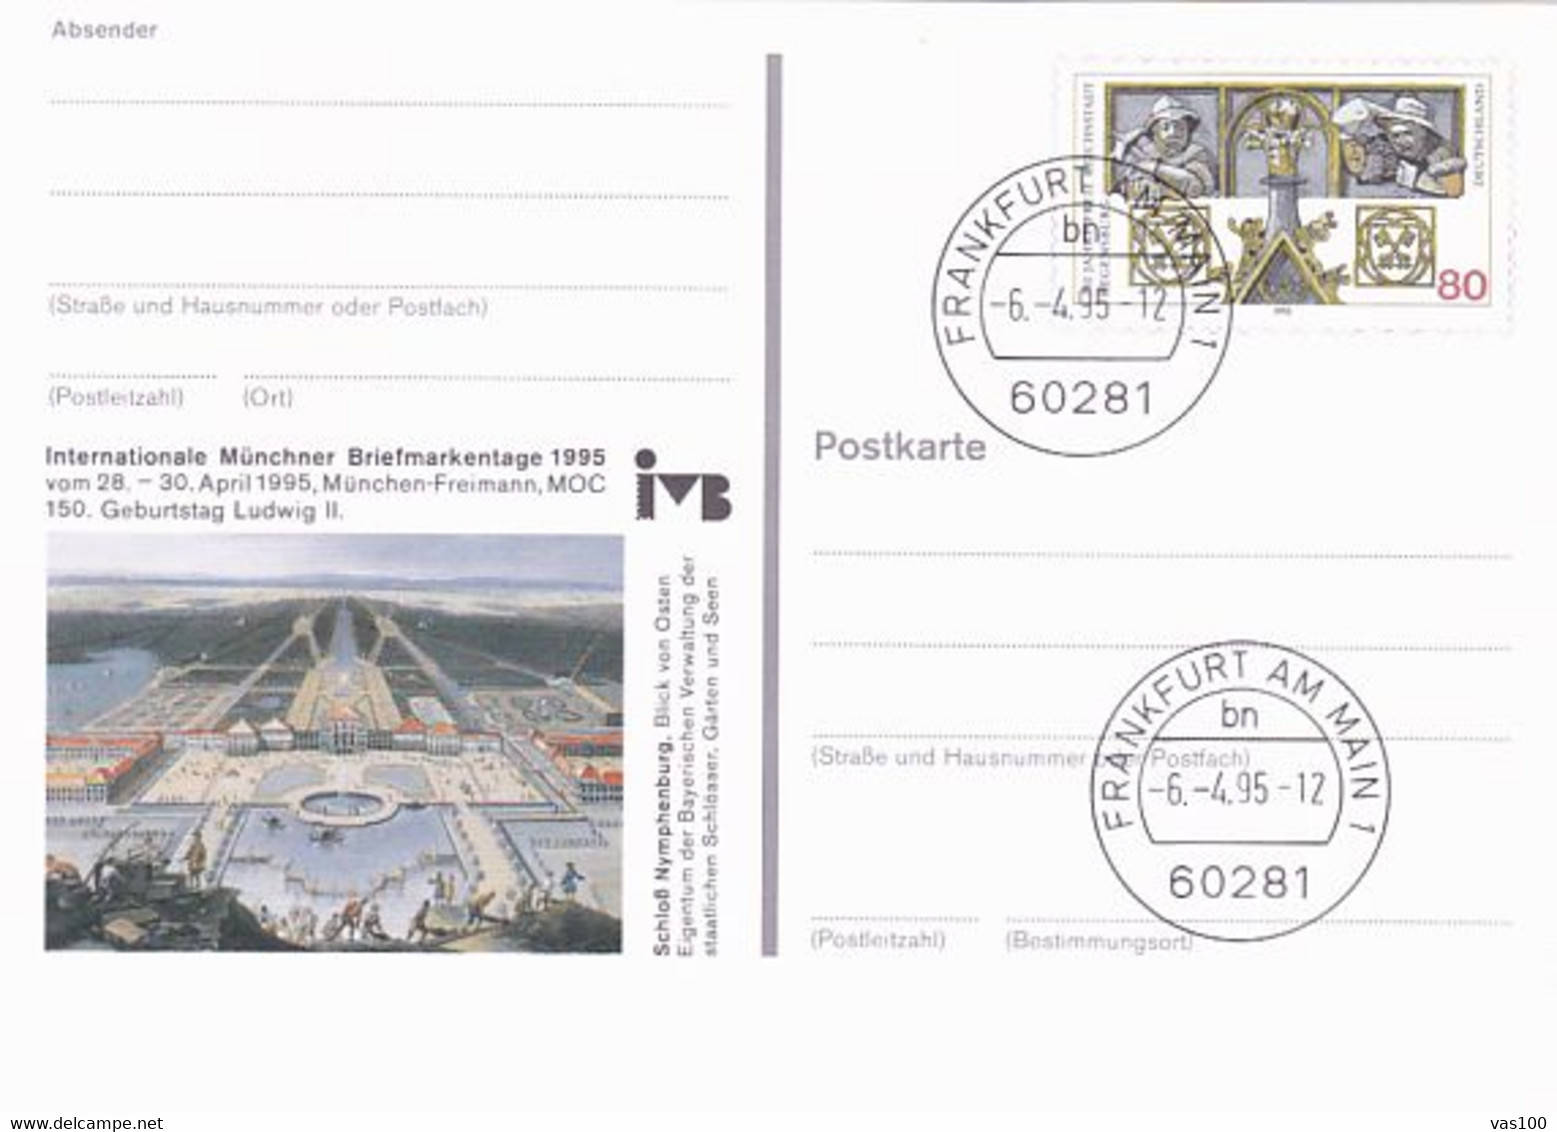 MUNCHEN PHILATELIC EXHIBITION, NYMPHENBURG PALACE, REGENSBURG, PC STATIONERY, ENTIER POSTAL, 1995, GERMANY - Postcards - Used